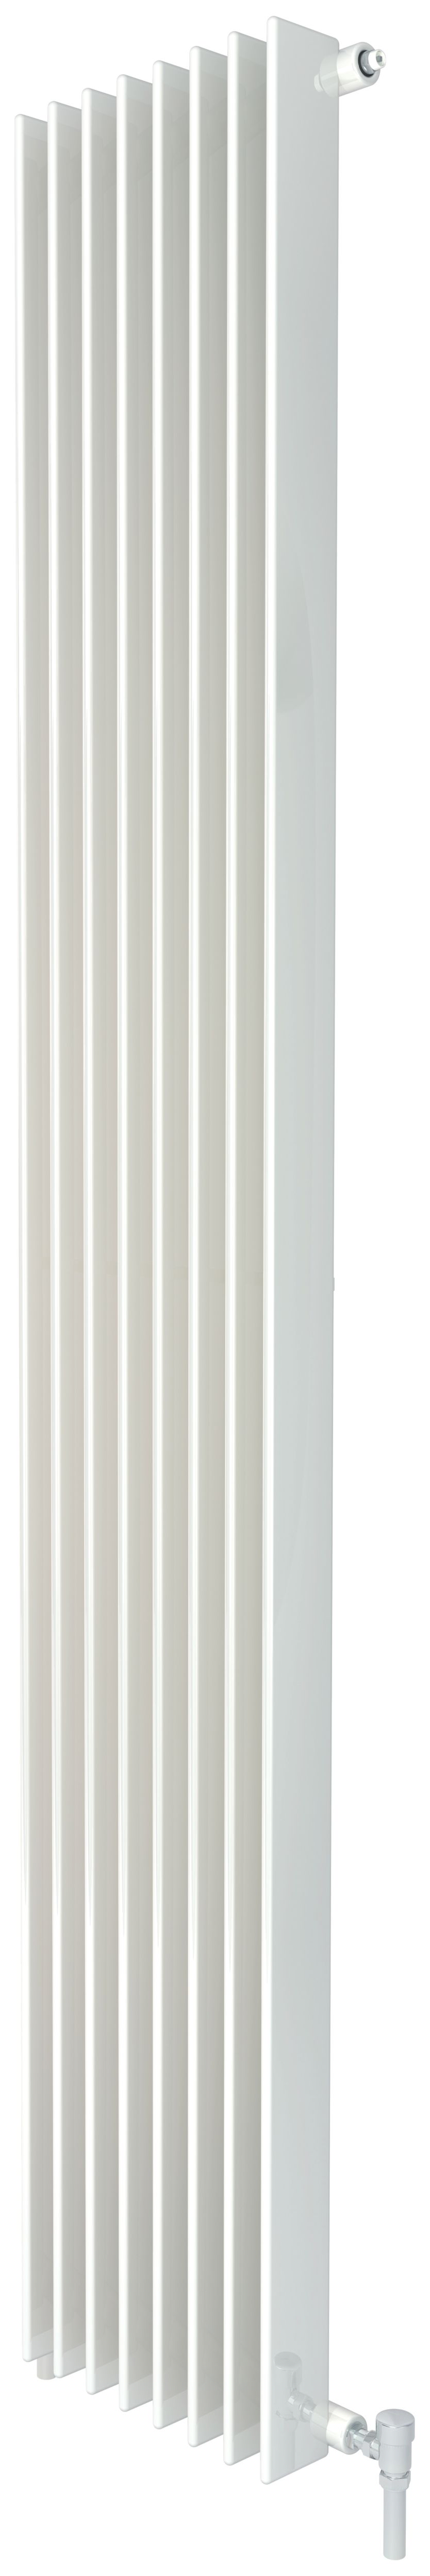 Henrad Verona Slim Single Panel Vertical Designer Radiator - White 2000 x 320 mm